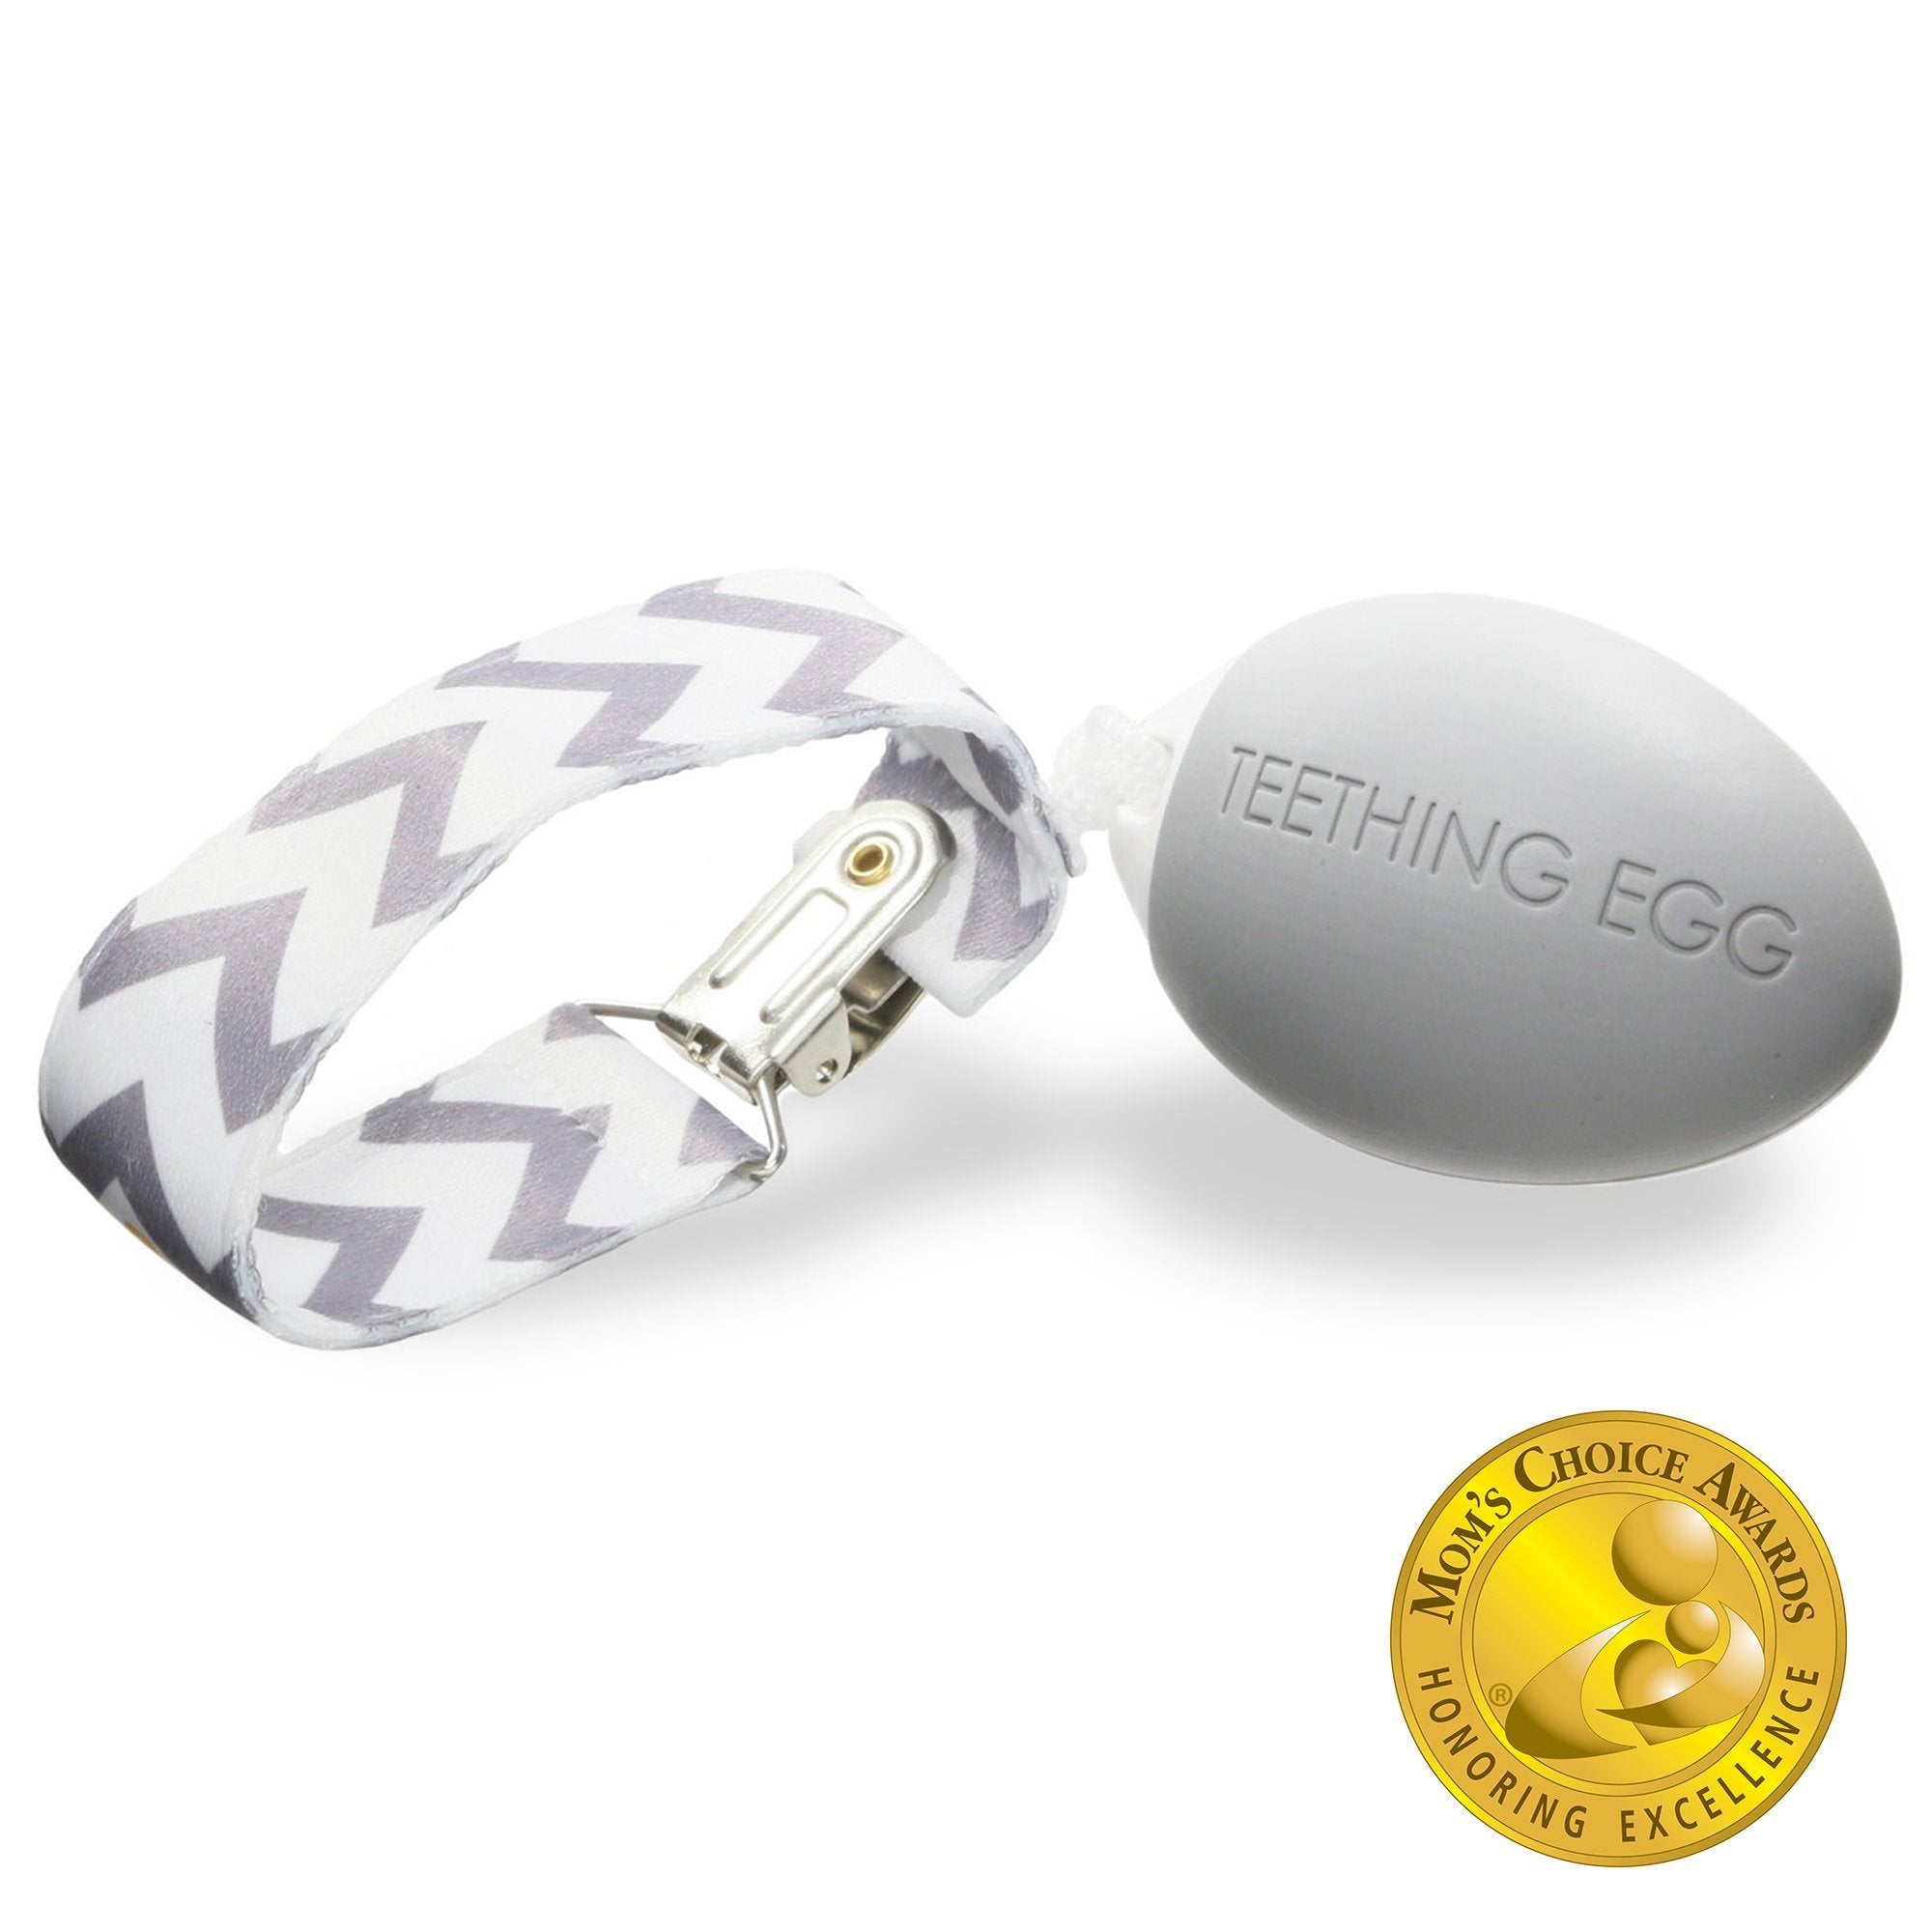 The Teething Egg - Soft Gray